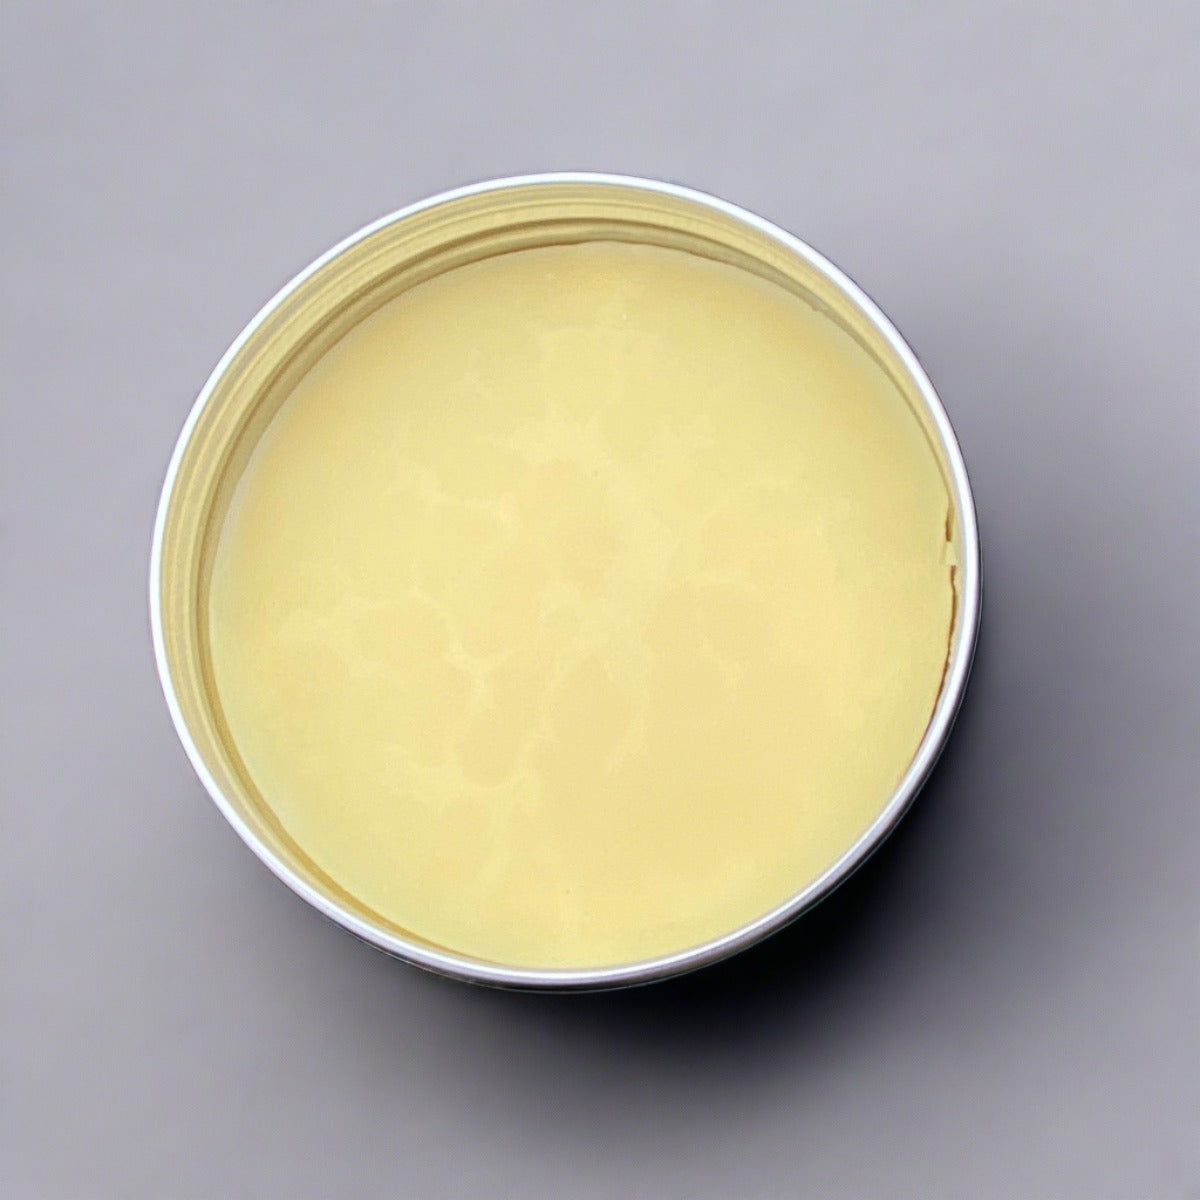 Multi-action organic orange butter face cream on rock background